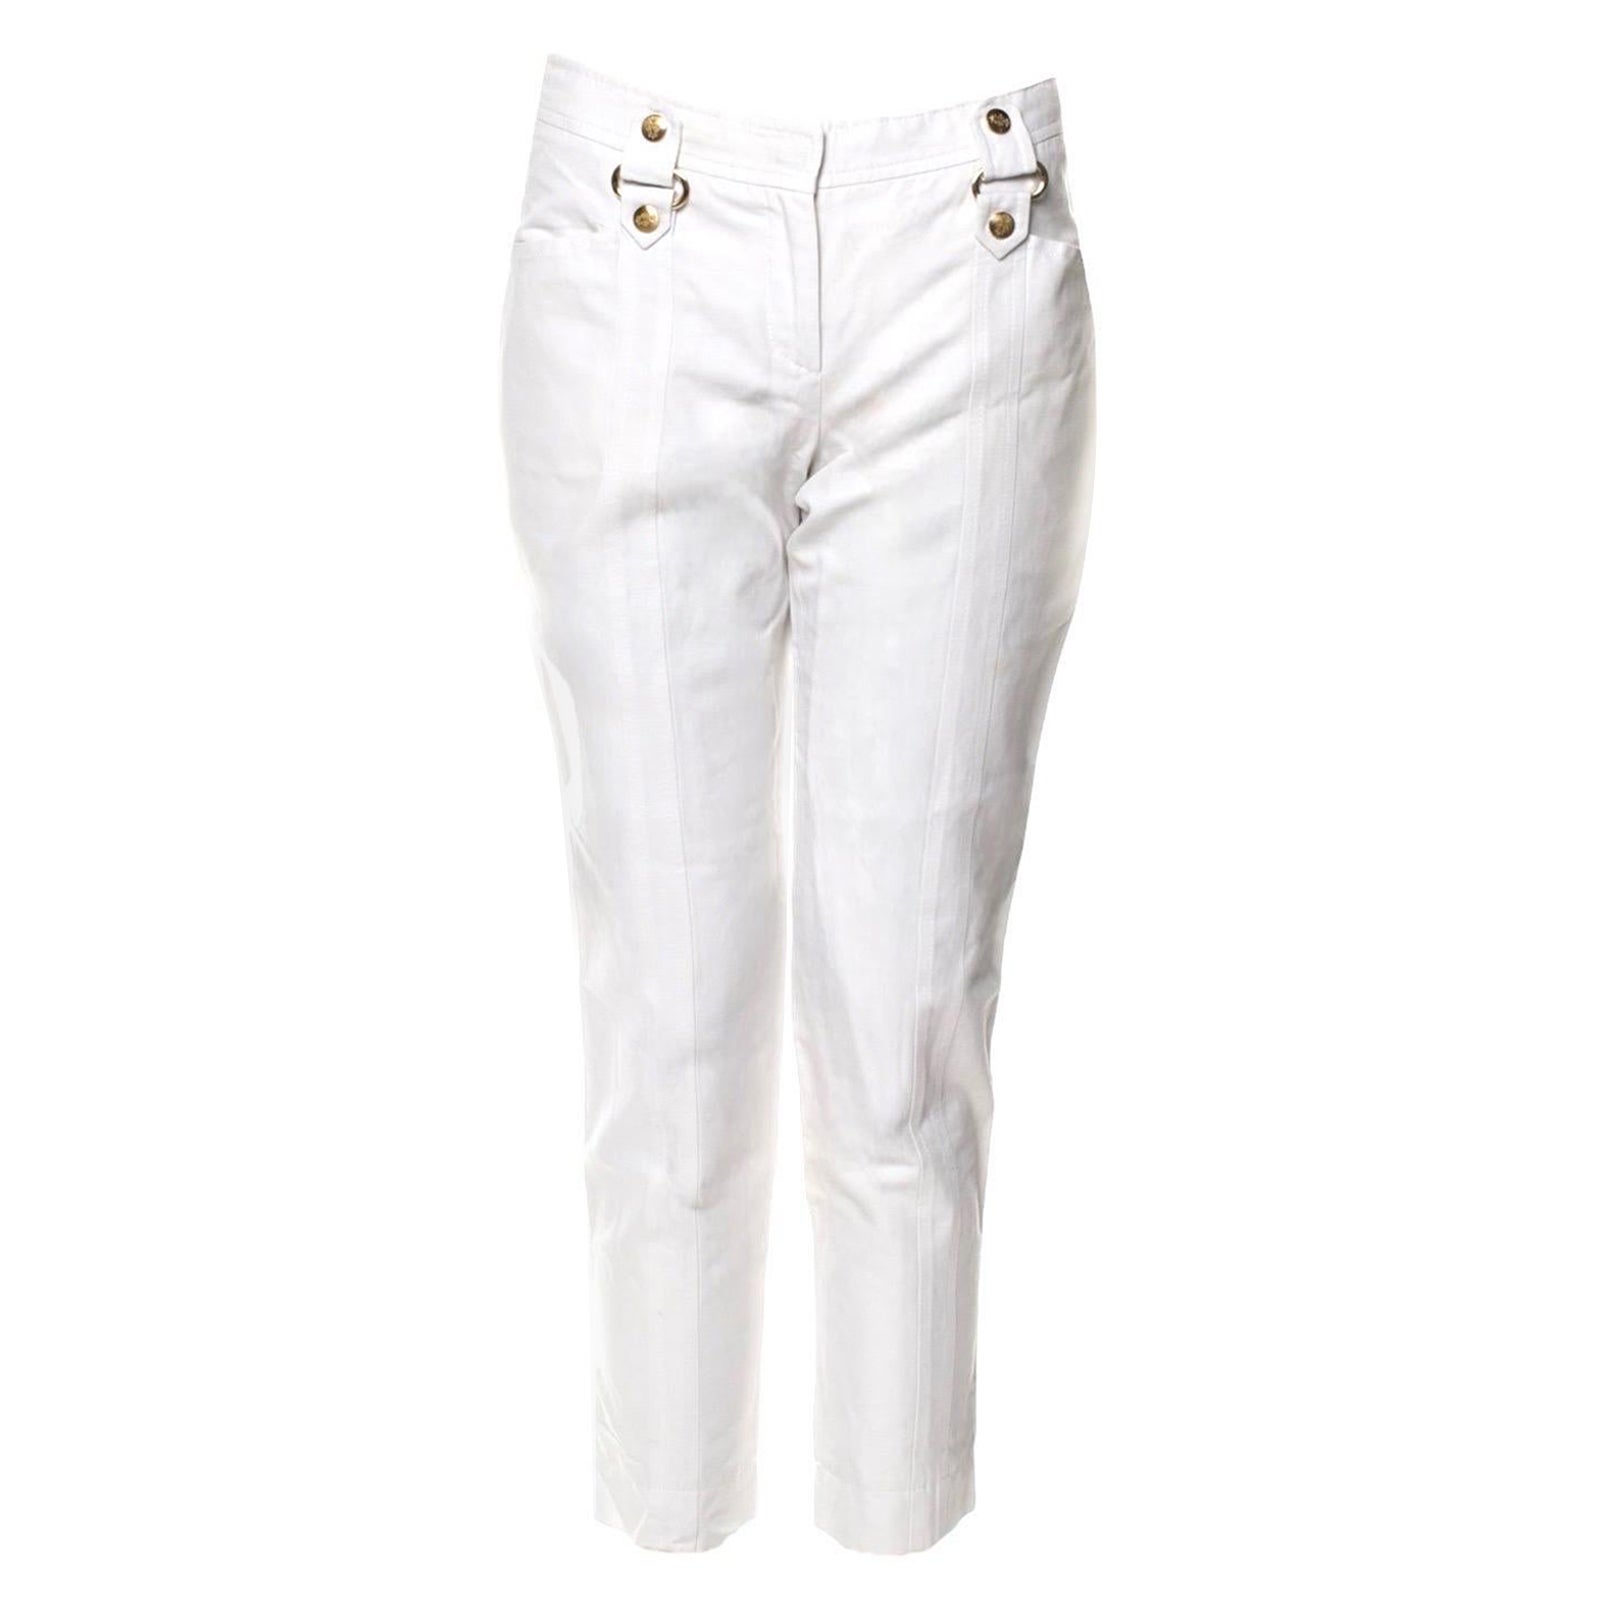 UNWORN Emilio Pucci Classy White Pants Trousers 42 For Sale